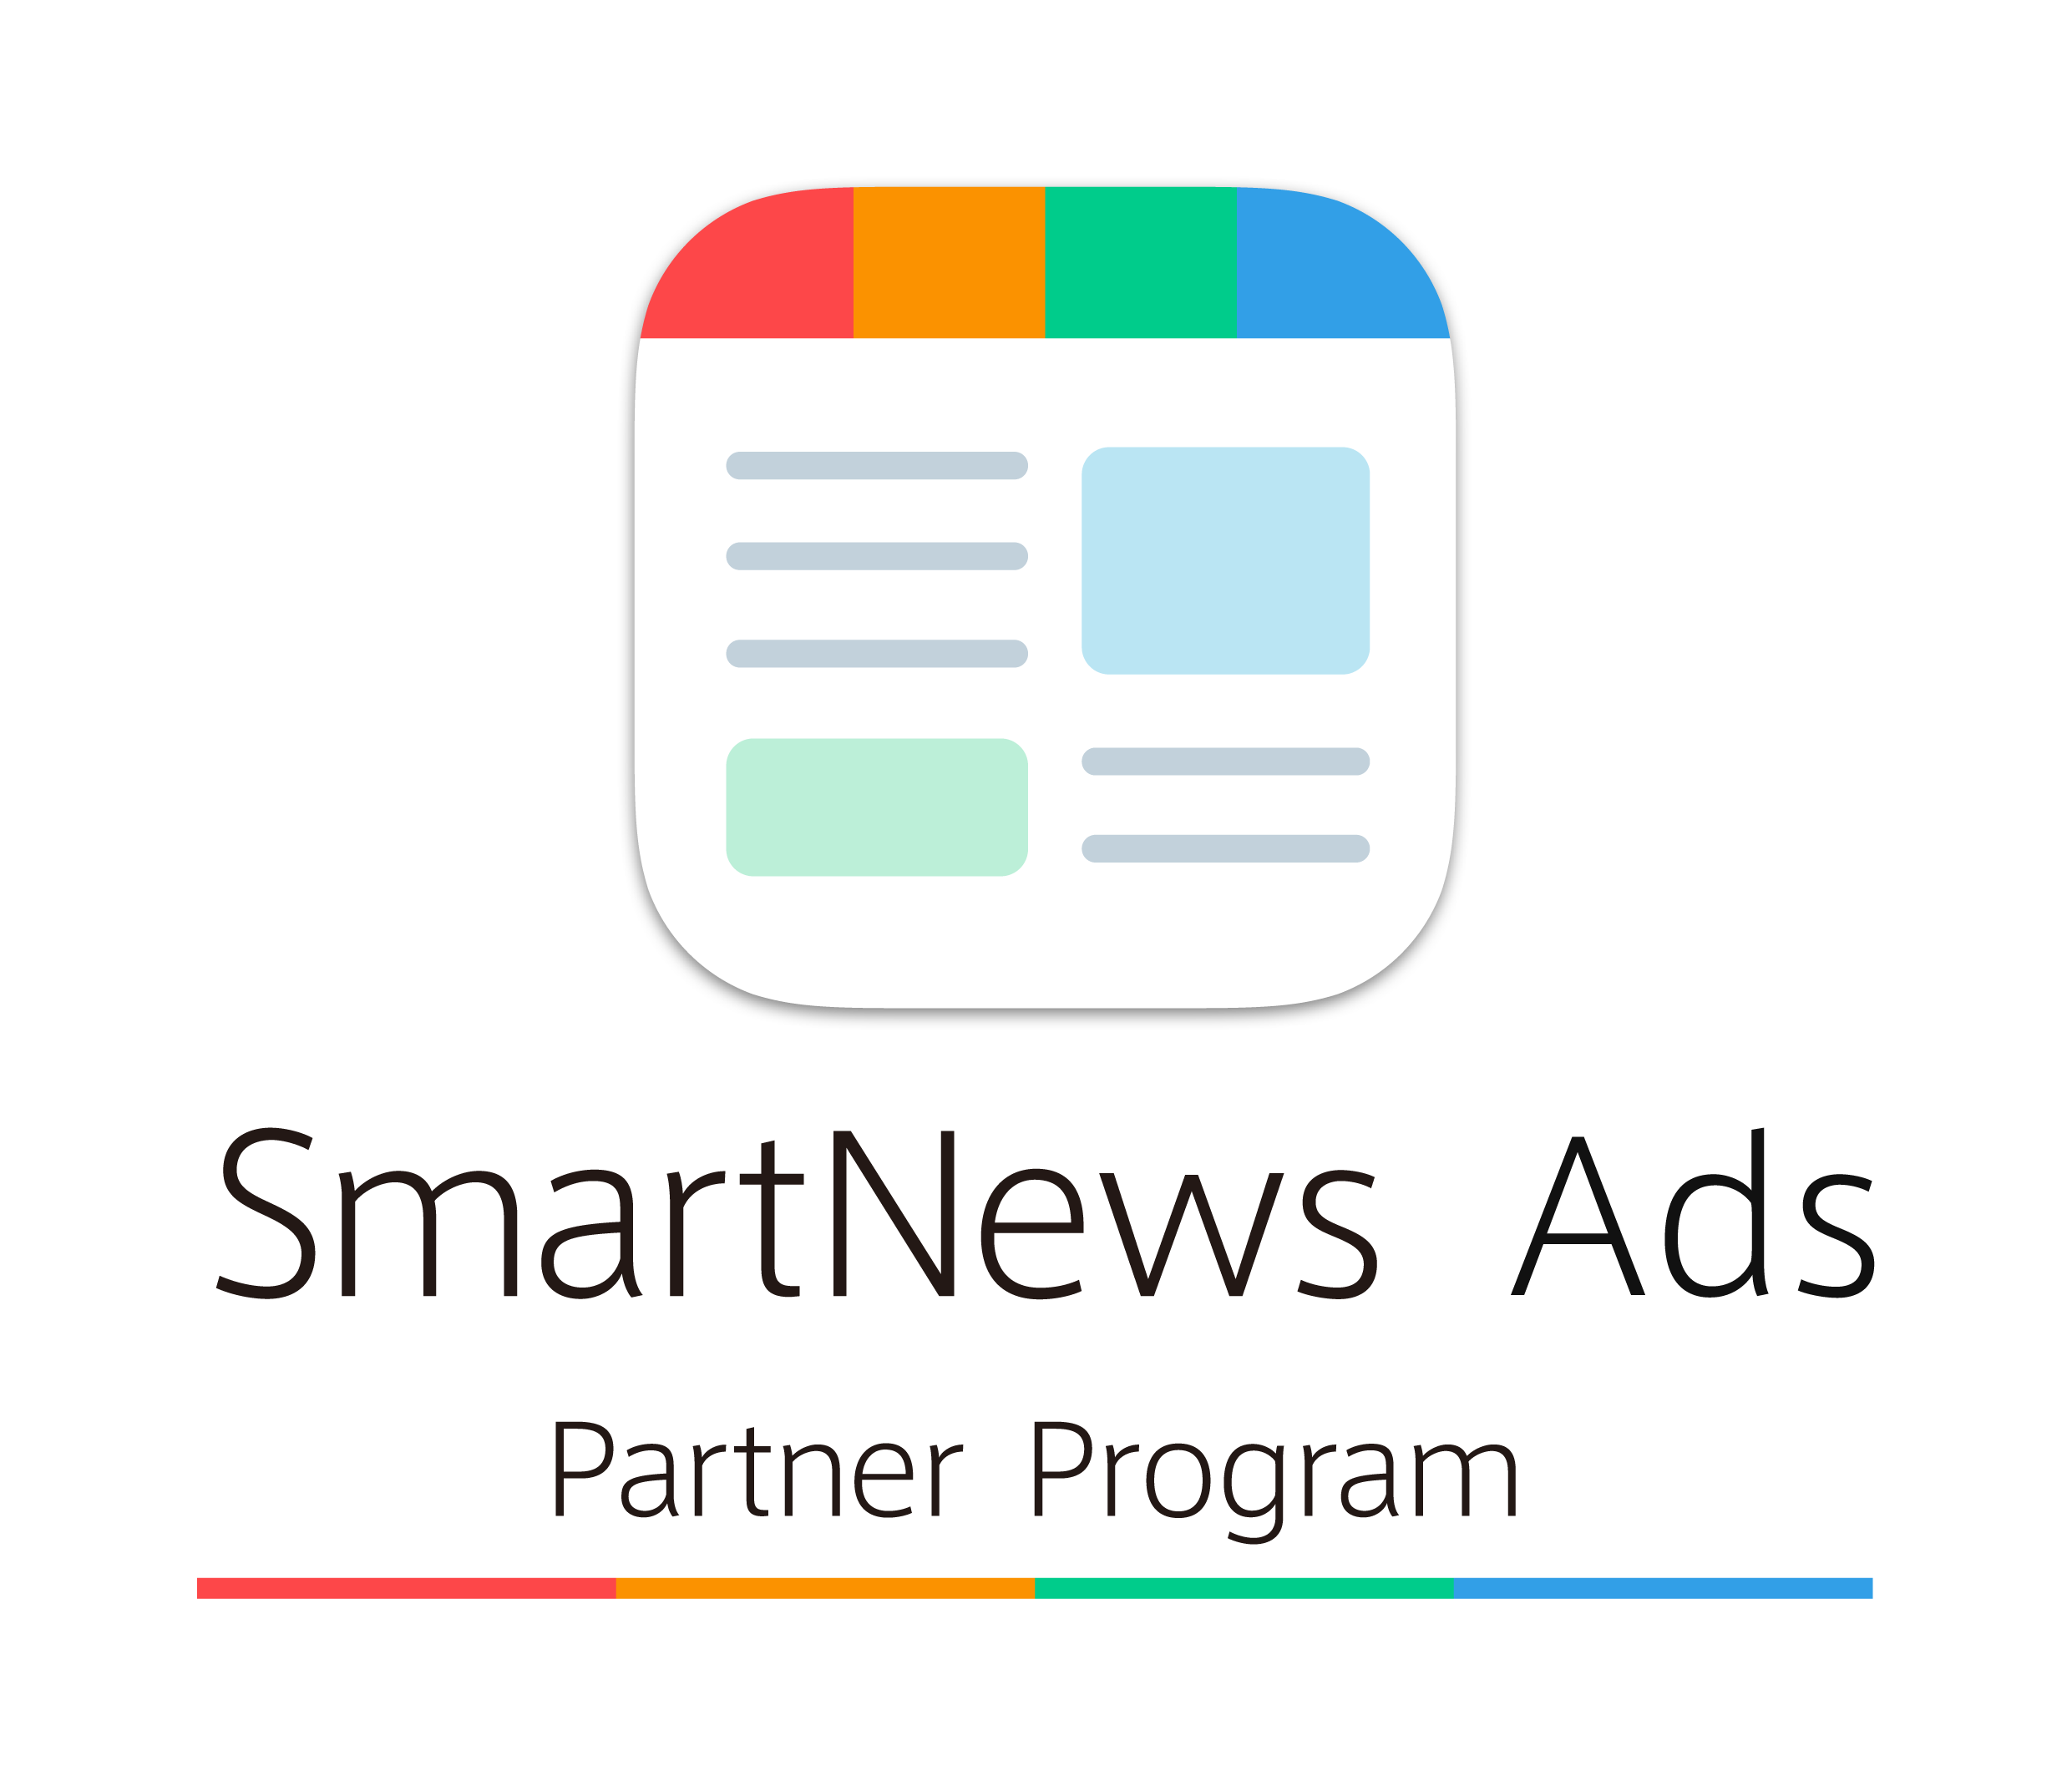 SmartNewsの認定代理店制度「SmartNews Ads パートナープログラム」において「SmartNews Ads パートナー」に認定されました！